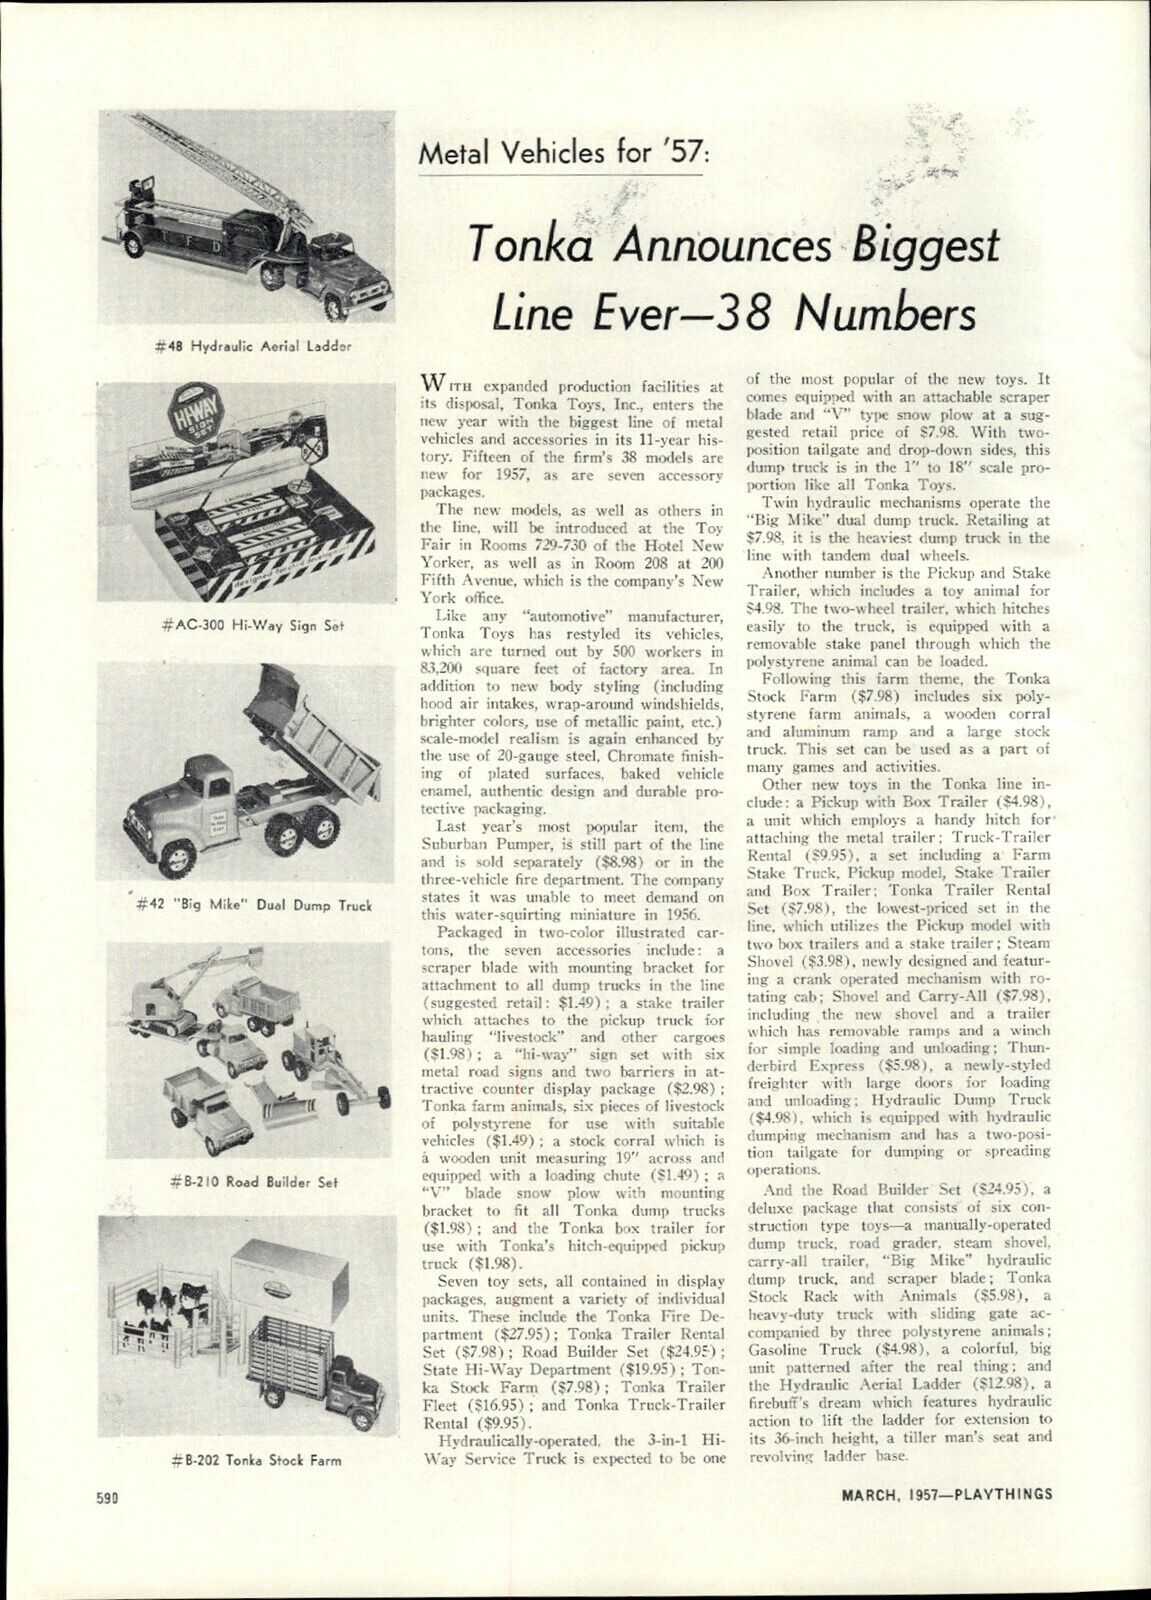 1957 PAPER AD Article Tonka Metal Toy Trucks Big Mike Aerial Ladder 